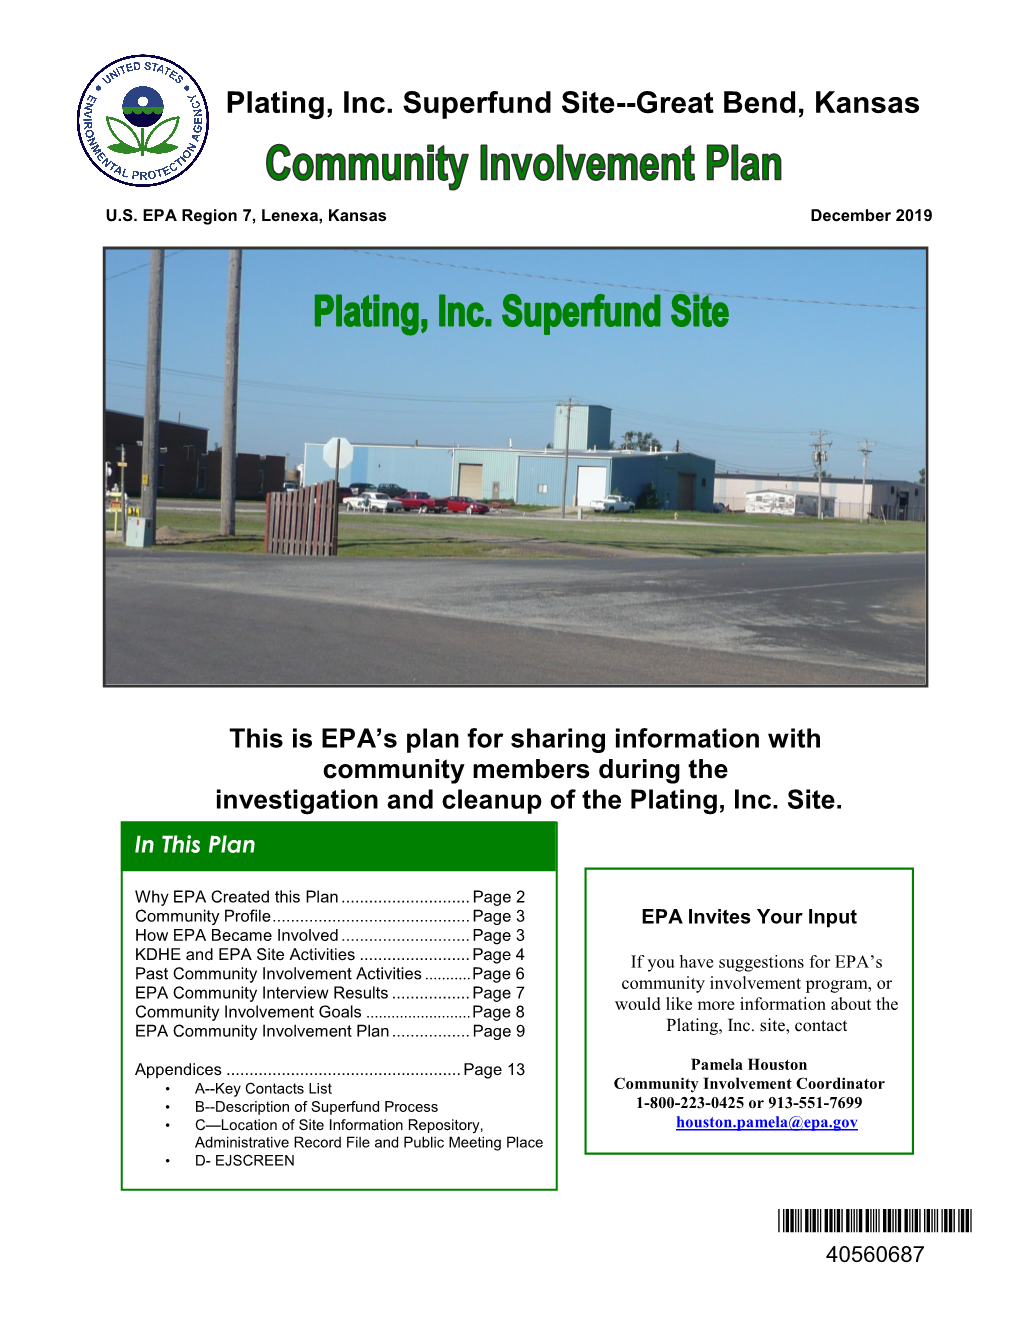 Community Involvement Plan 2020